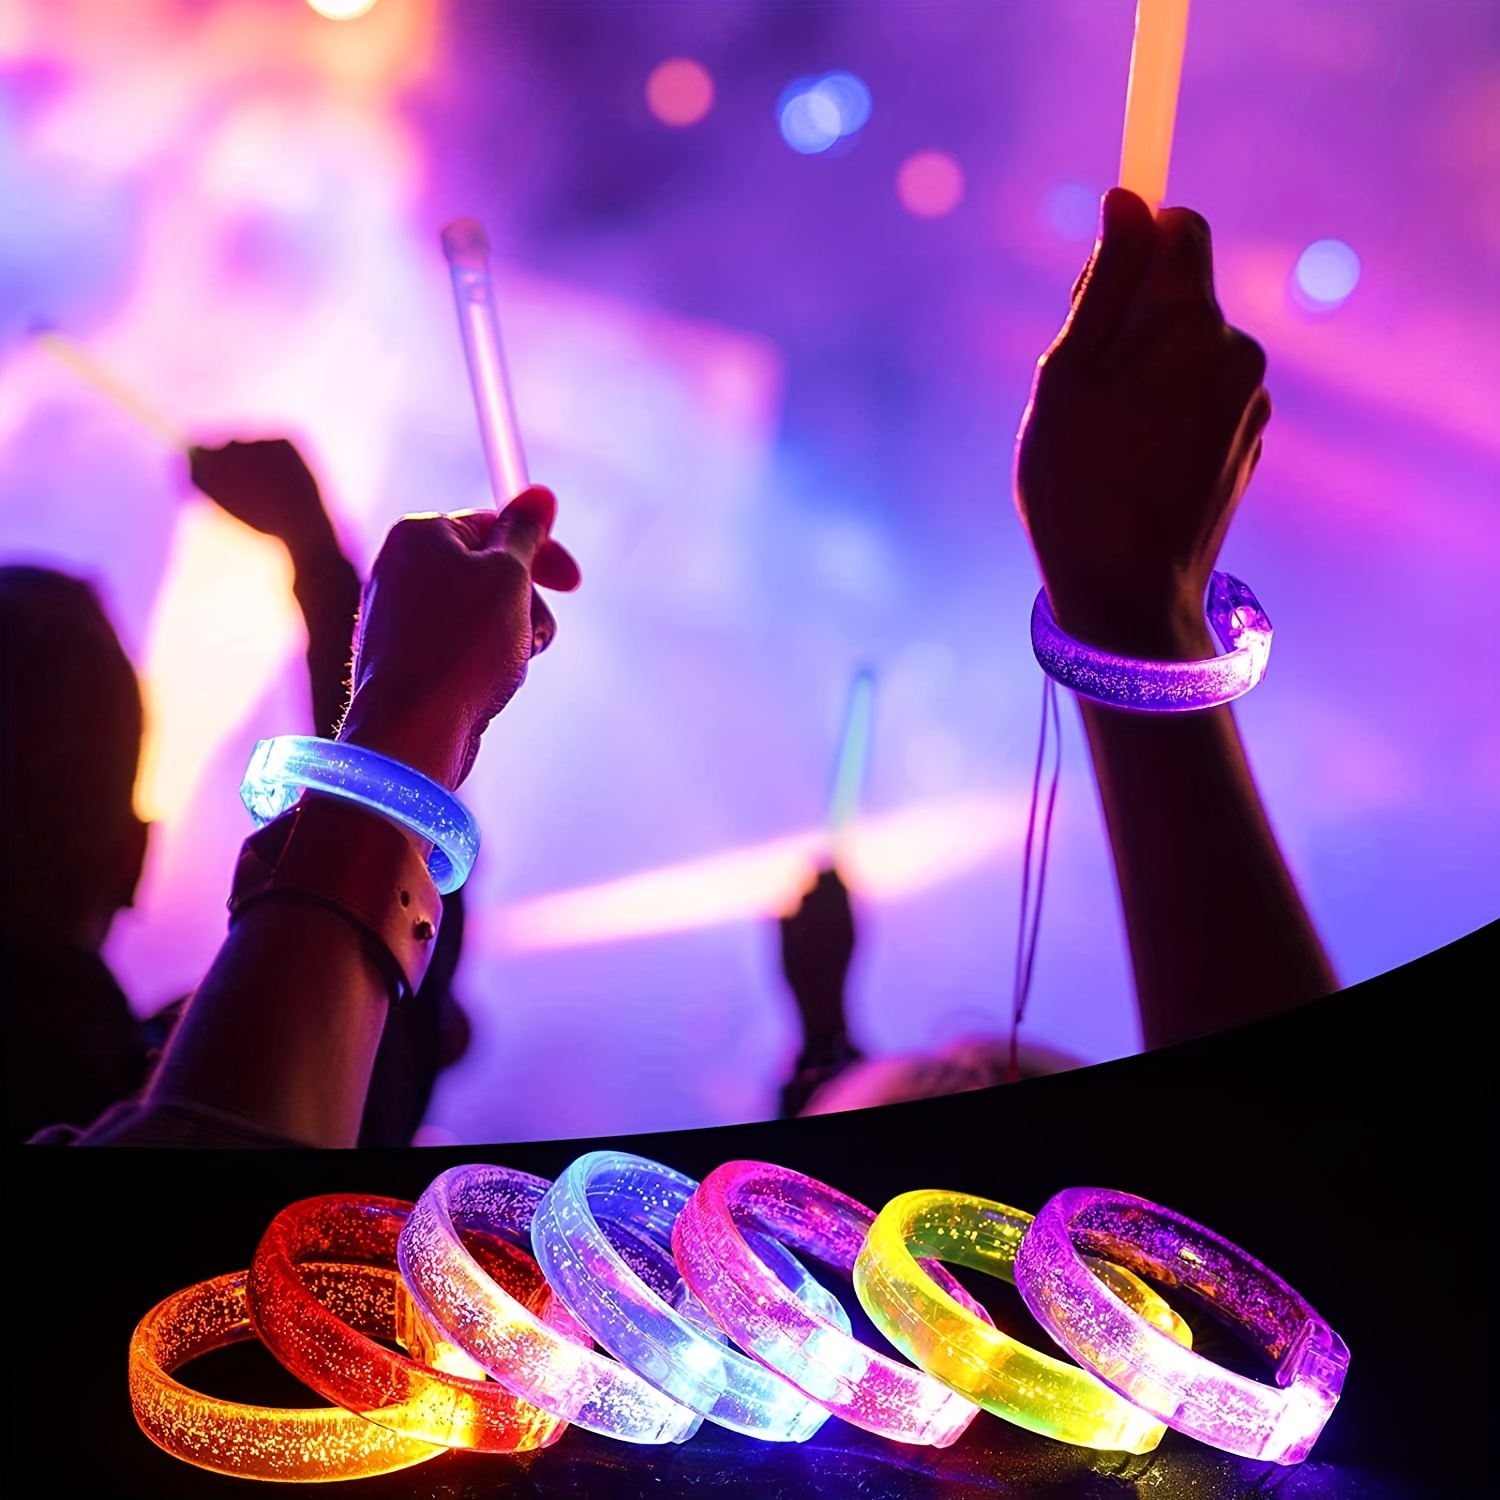 Glow Sticks Bracelets Party Supplies Glow in The Dark LED